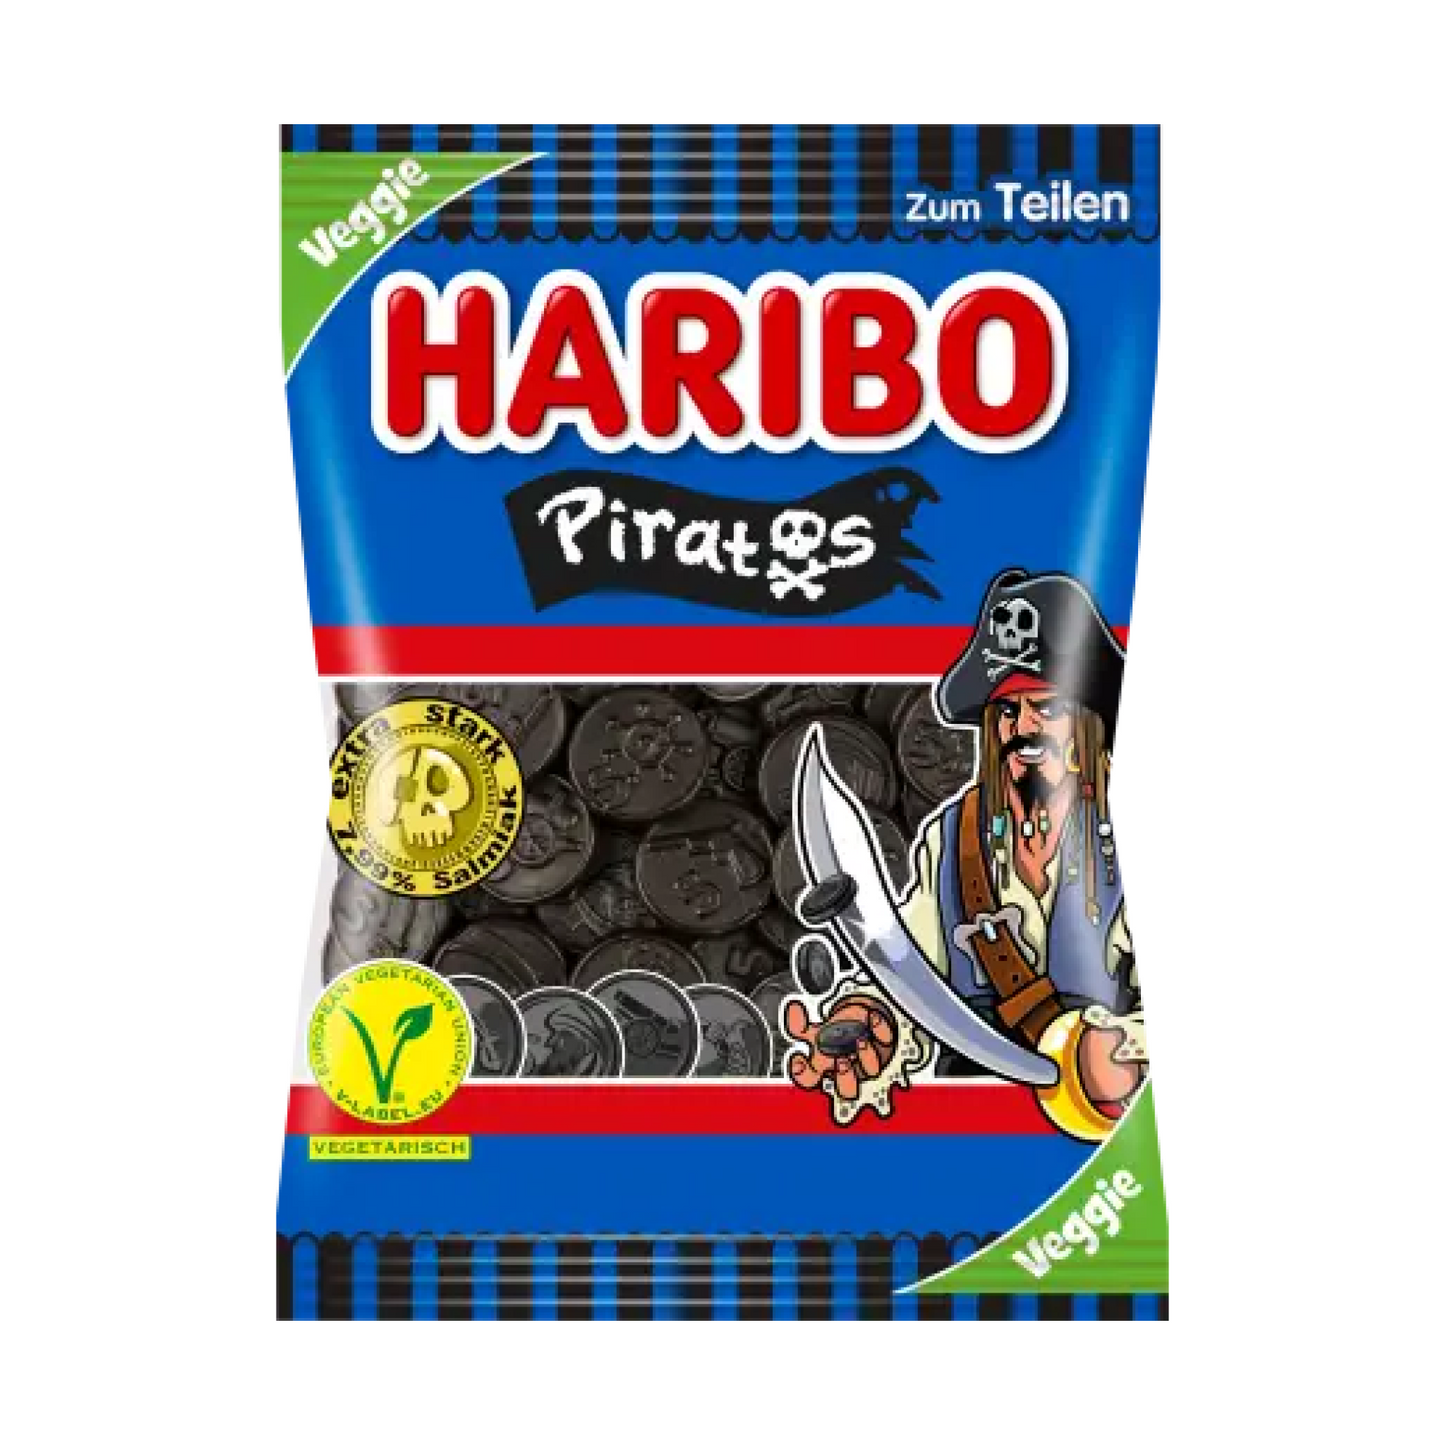 Haribo Pirates 200g